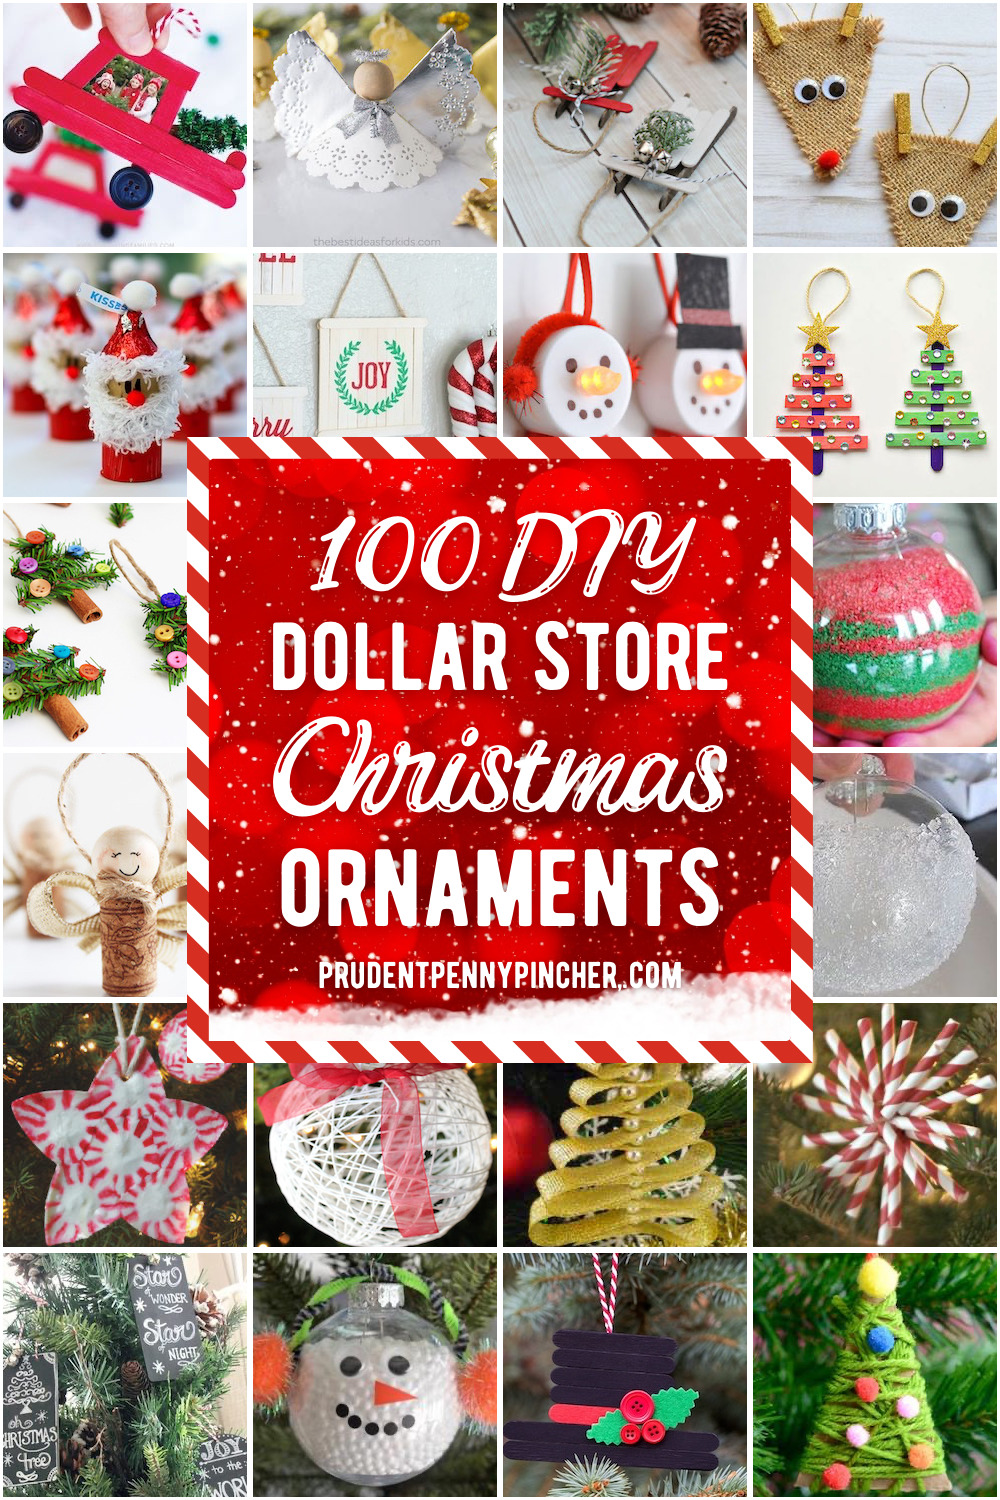 4 Christmas Pine Cone Ornaments Decor DIY, Dollar Tree Red Truck